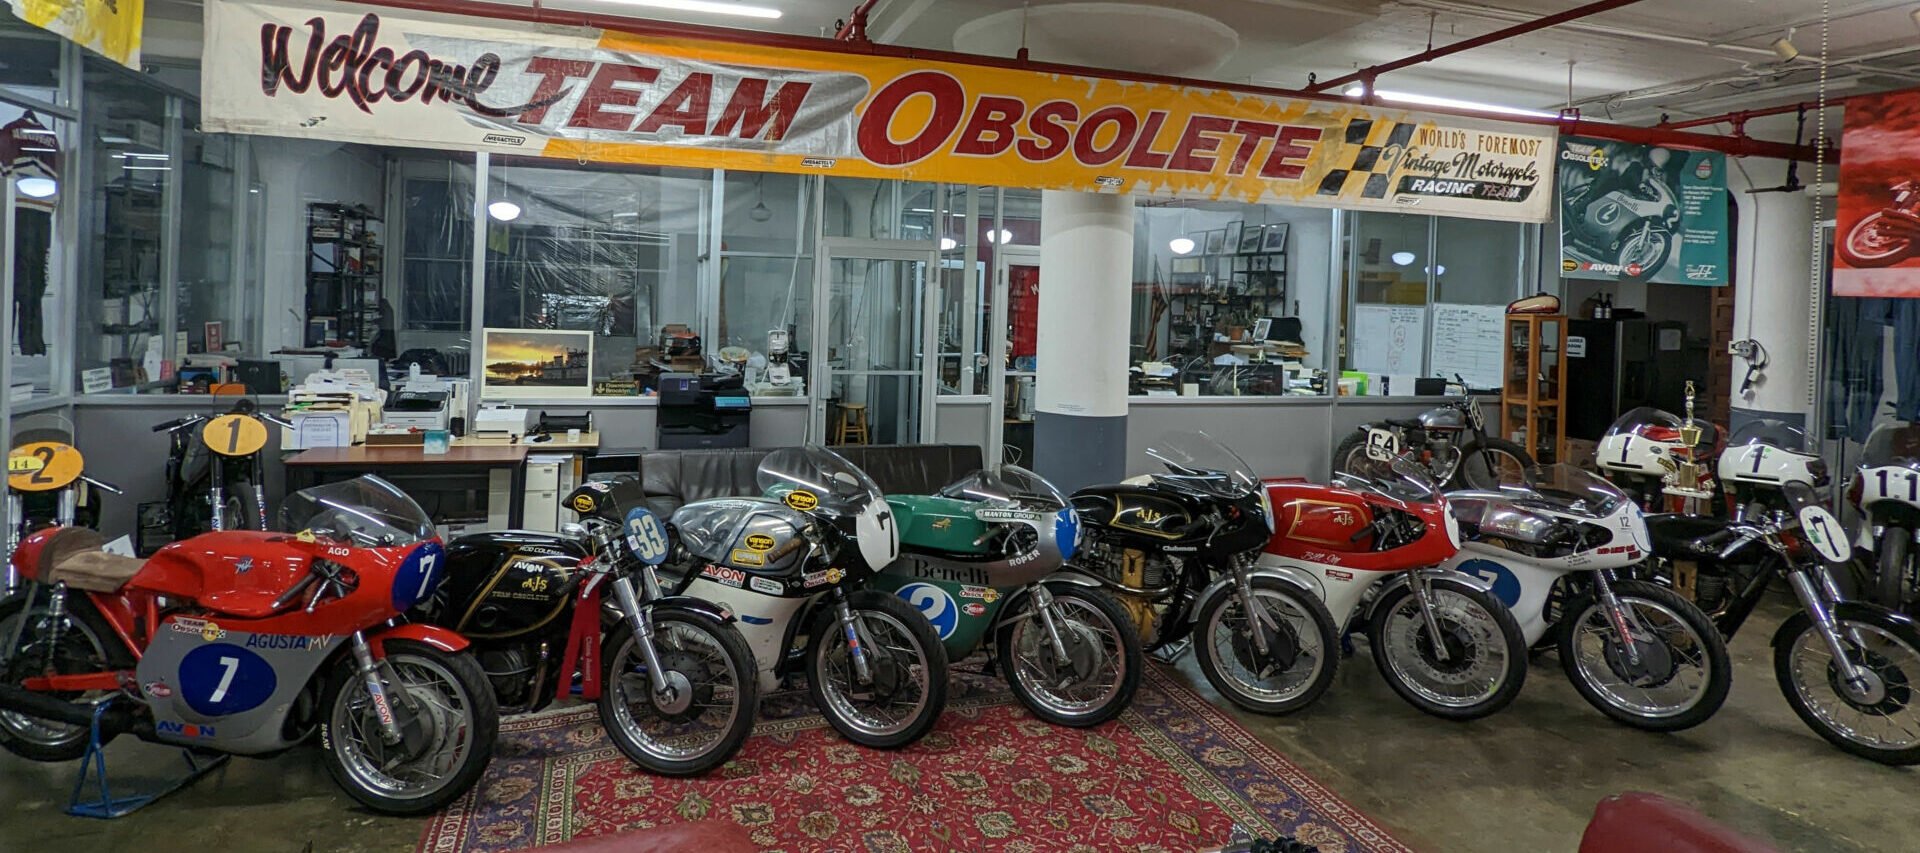 Some of Team Obsolete's fleet of 350cc Grand Prix racebikes. Photo courtesy Team Obsolete.